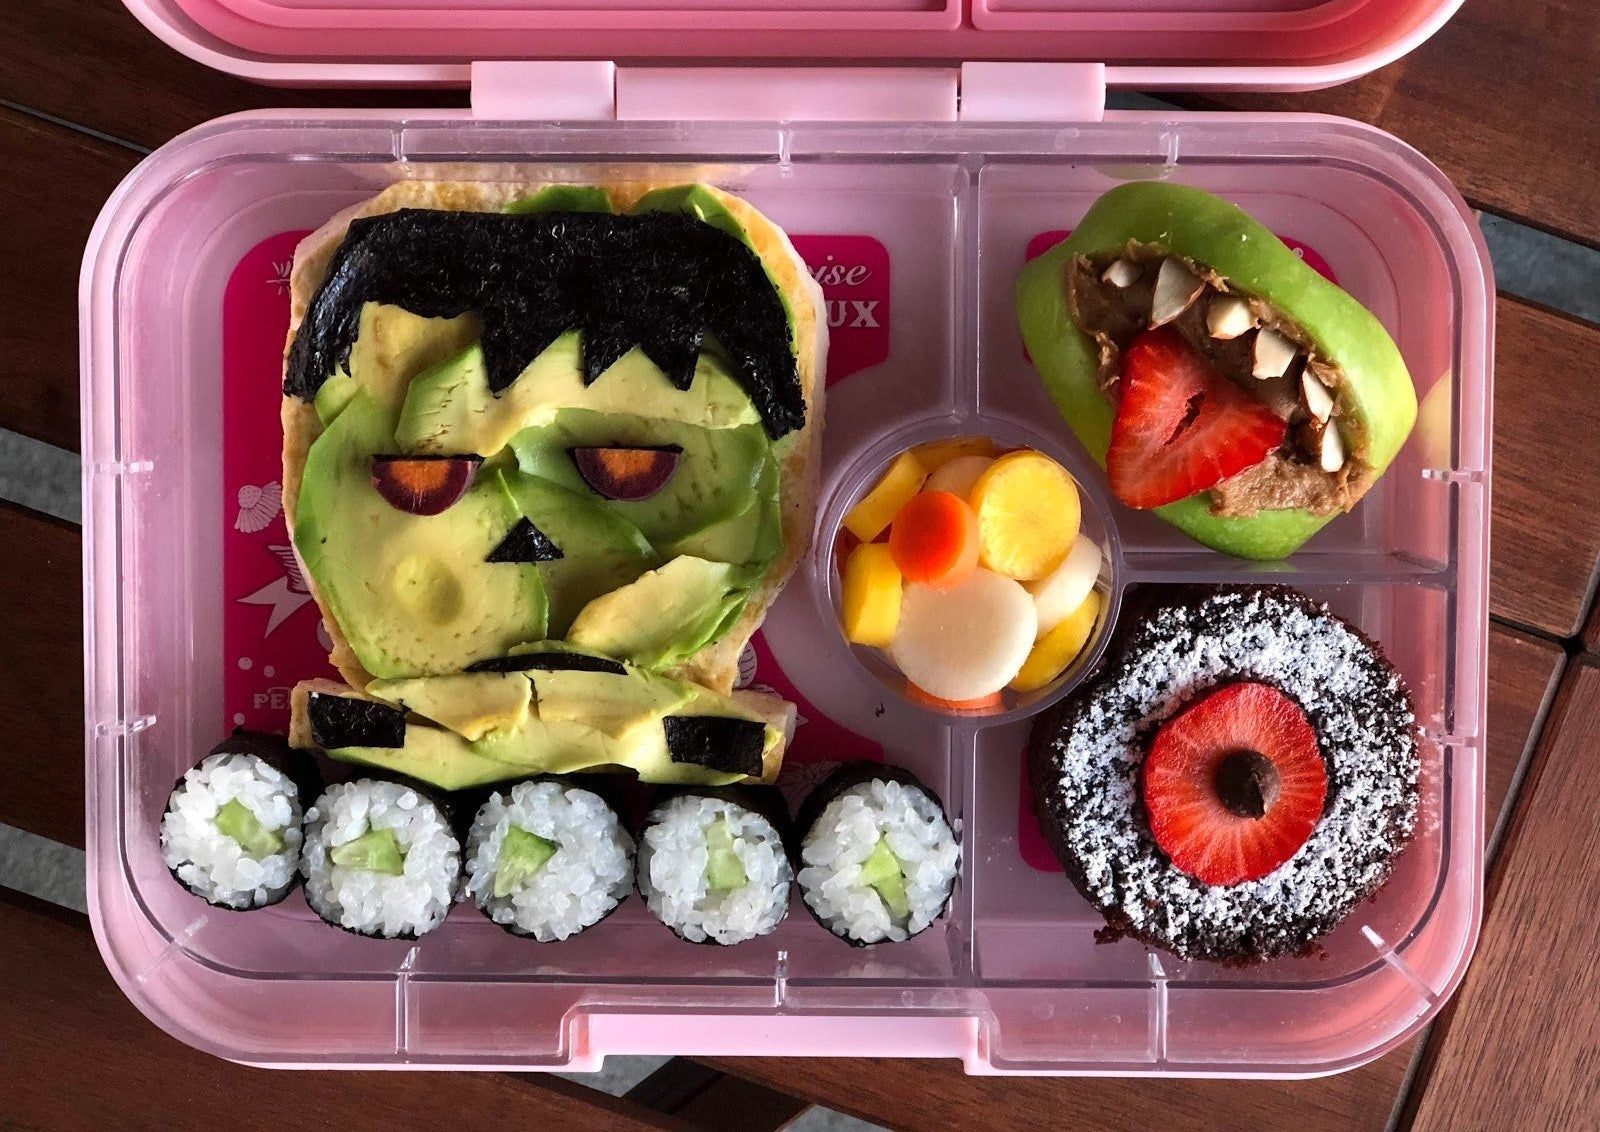 Lunch Ideas for Kids, vegan + healthy (bento box)